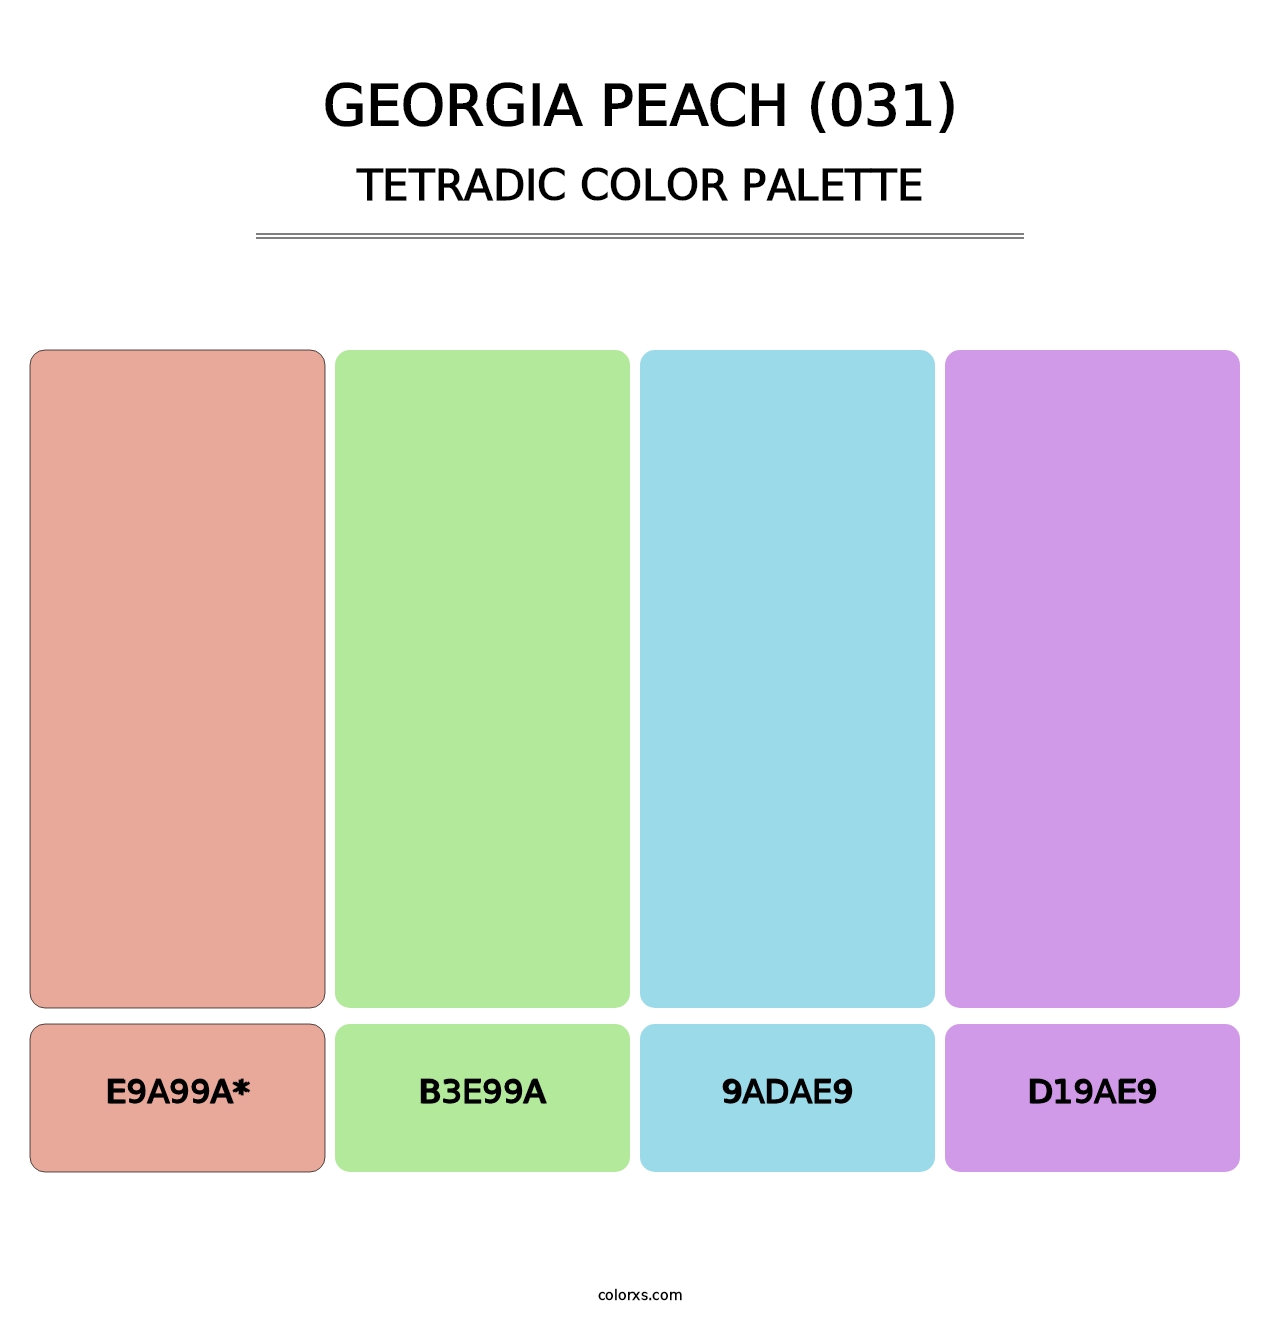 Georgia Peach (031) - Tetradic Color Palette